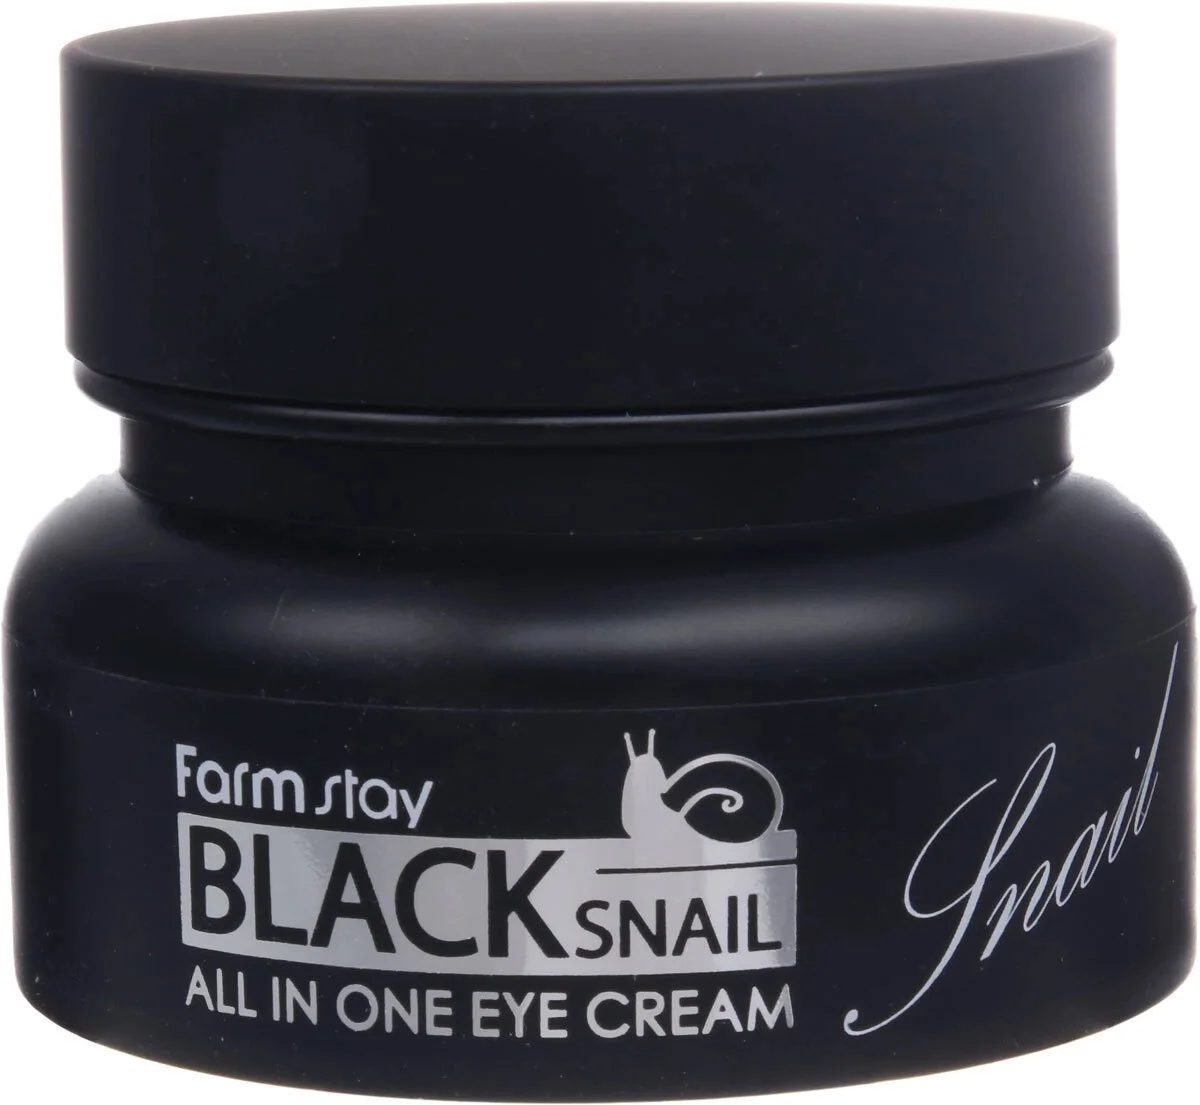 Farmstay Black Snail Premium Eye Cream. Крем вокруг глаз Farm stay Black Snail. Farm stay Black Snail Premium Eye Cream 50 мл. Farmstay Black Snail all in one Eye Cream, 50ml. Крем с муцином черной улитки